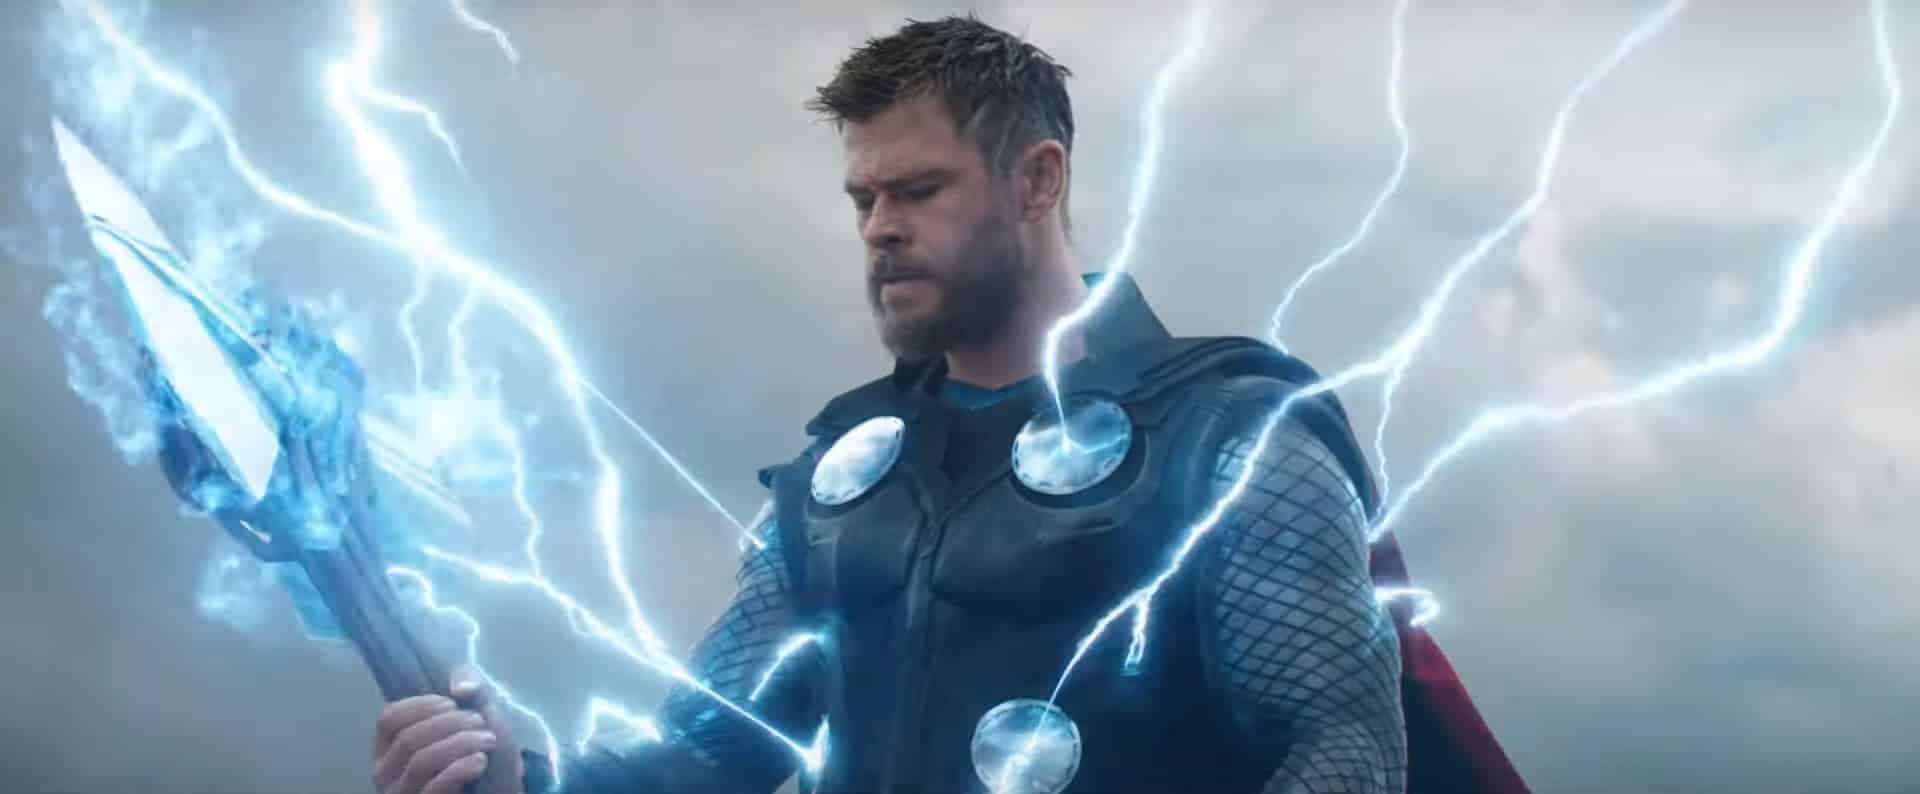 Avengers: Endgame – Chris Hemsworth promuove il suo “progettino”